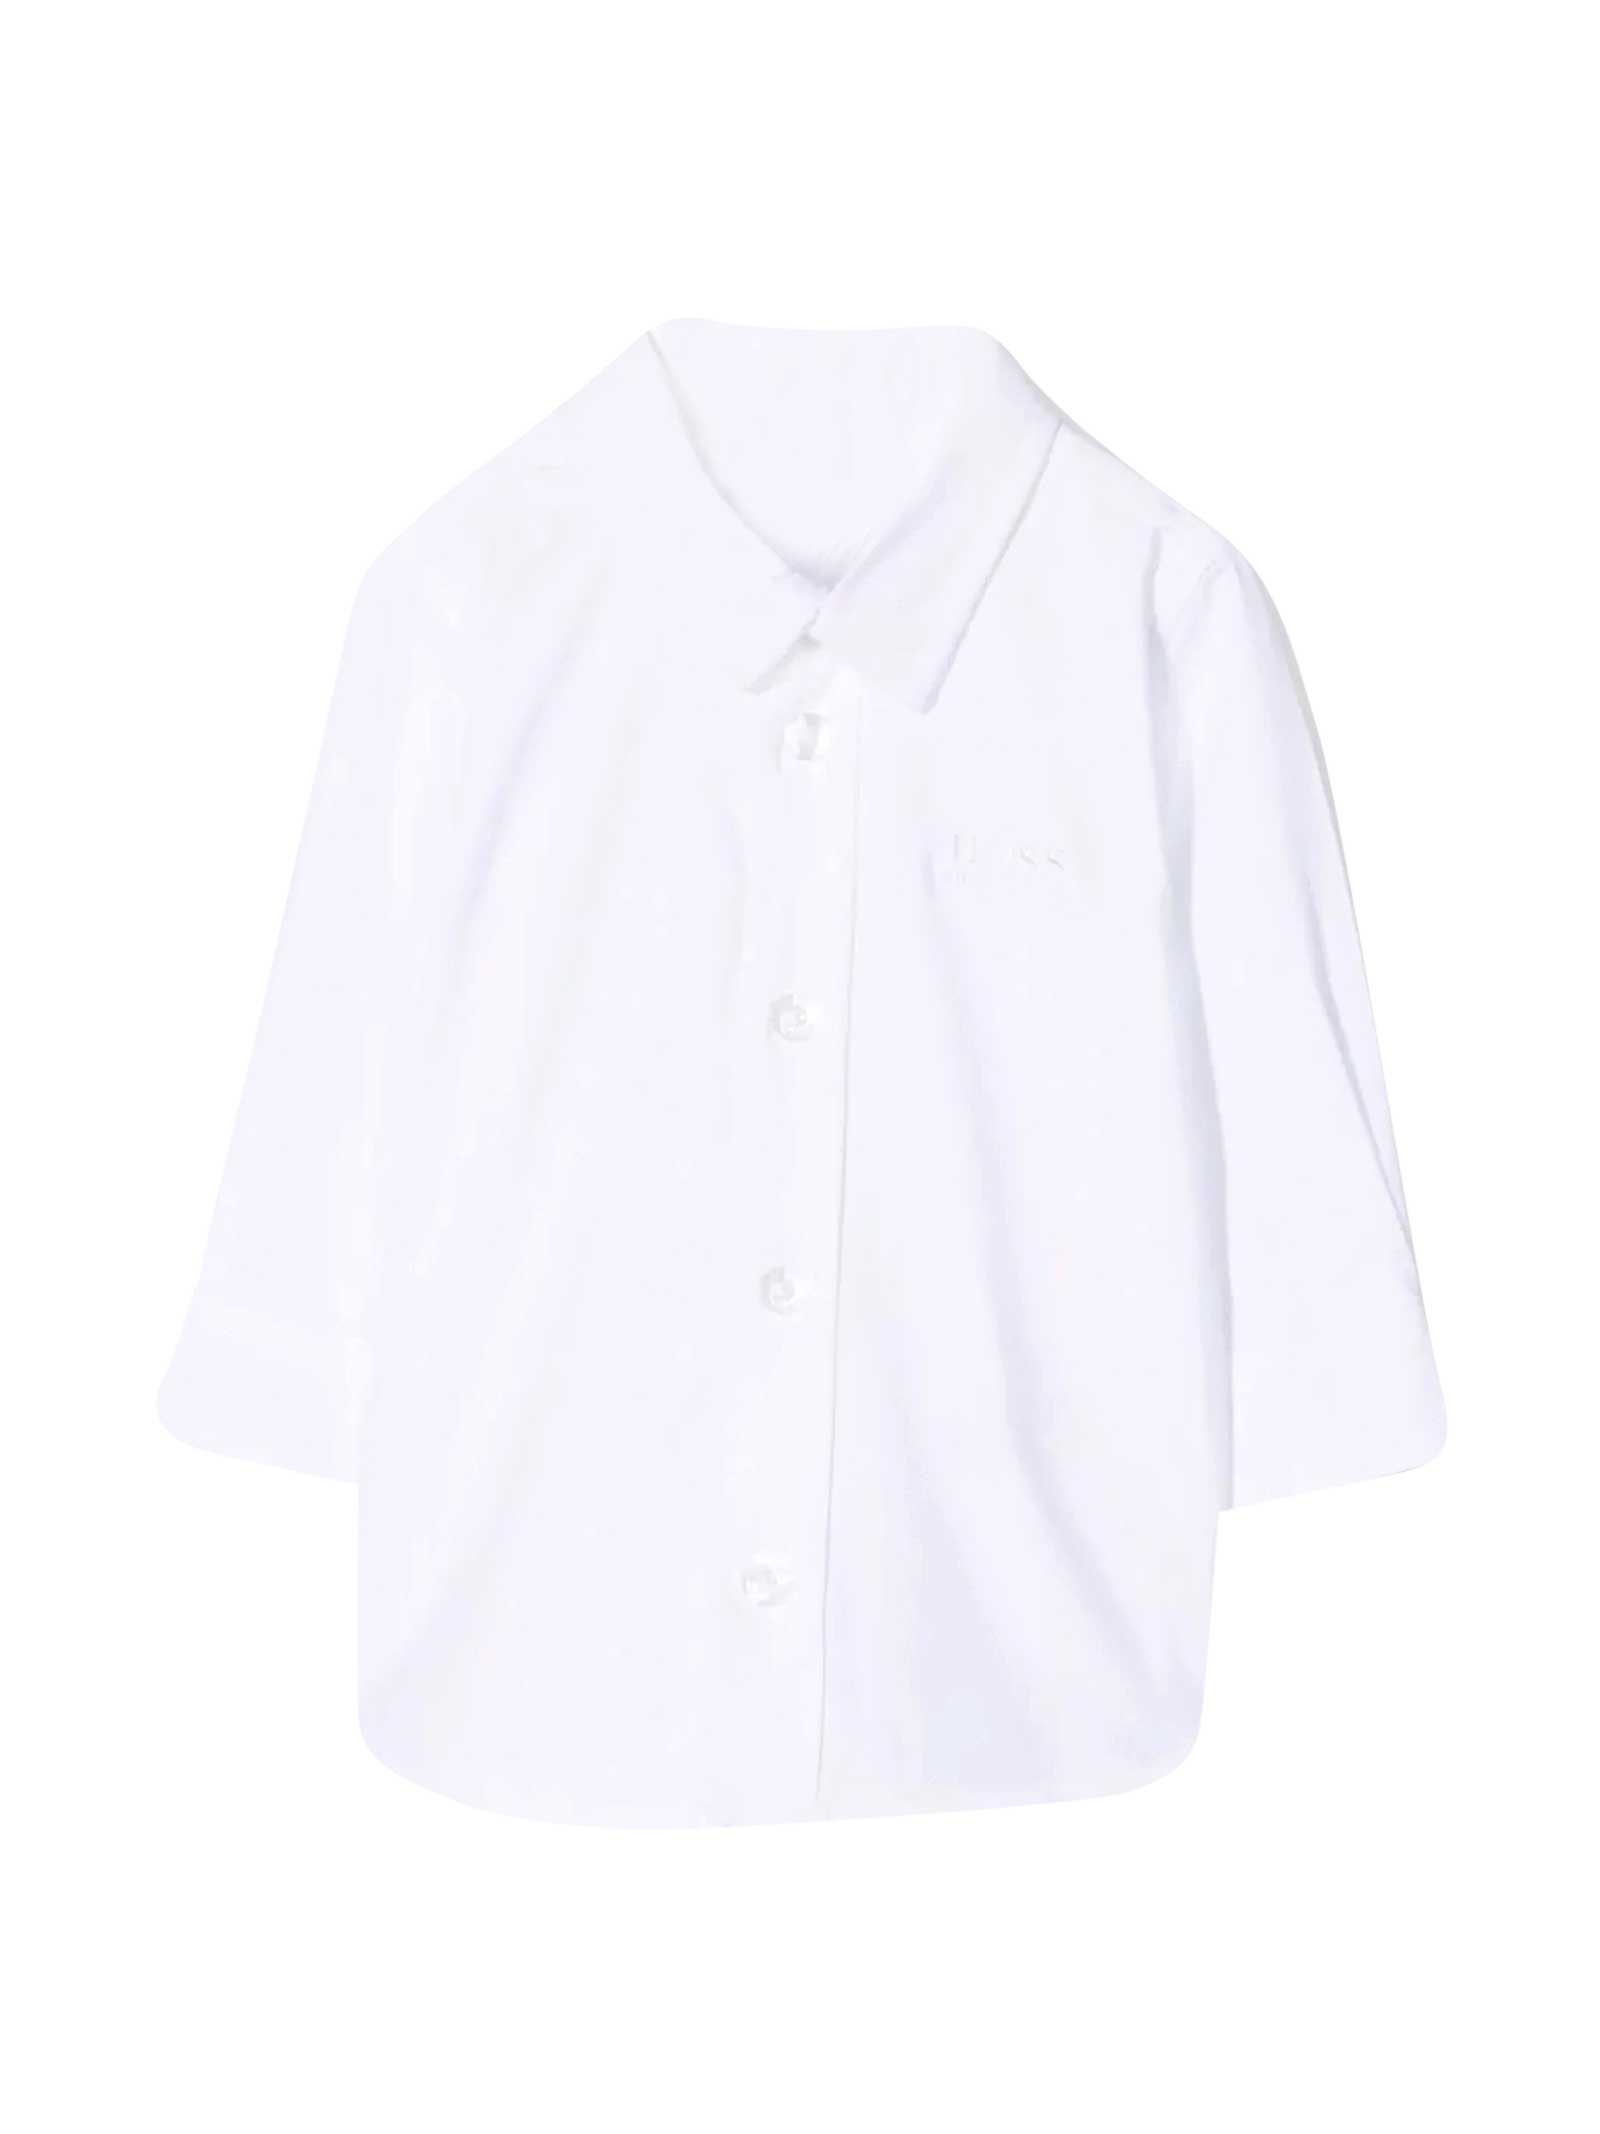 Hugo Boss White Shirt